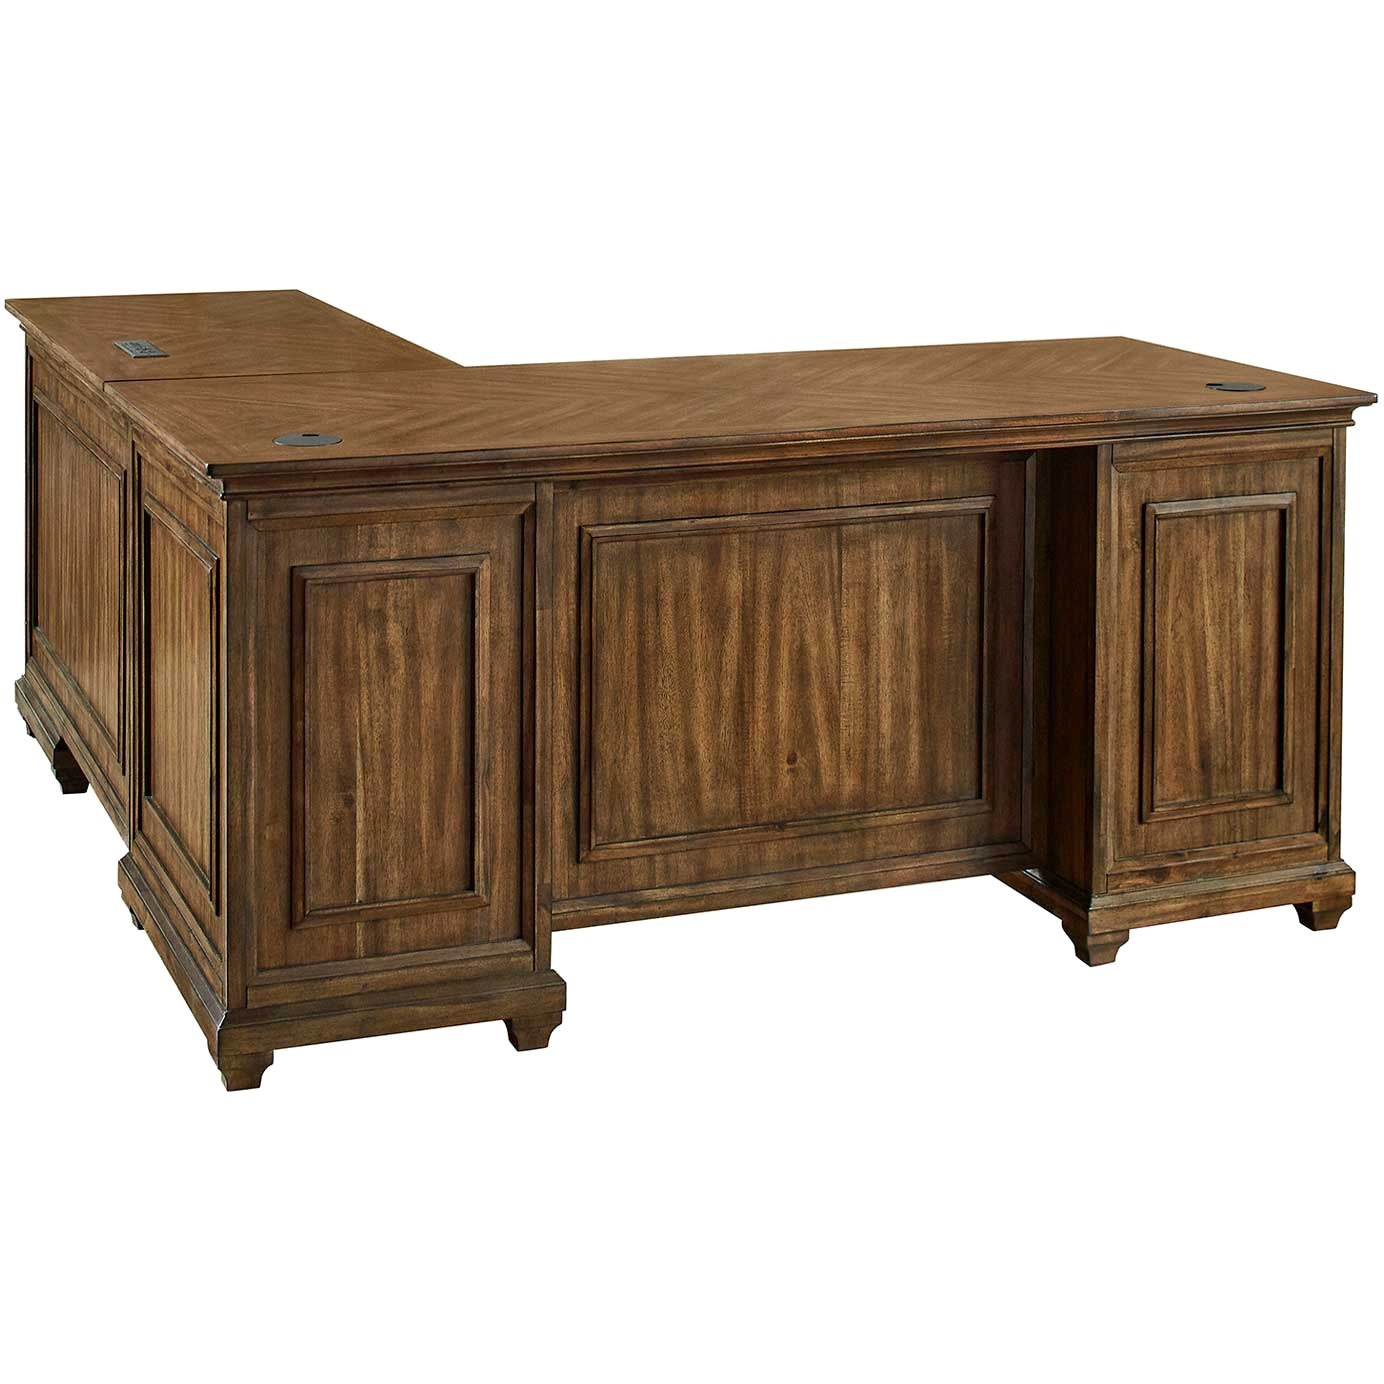 martin-porter-desk-with-pedestal-box-1-of-2-68-x-3030-4-x-storage-drawers_mrtimpr684r - 2